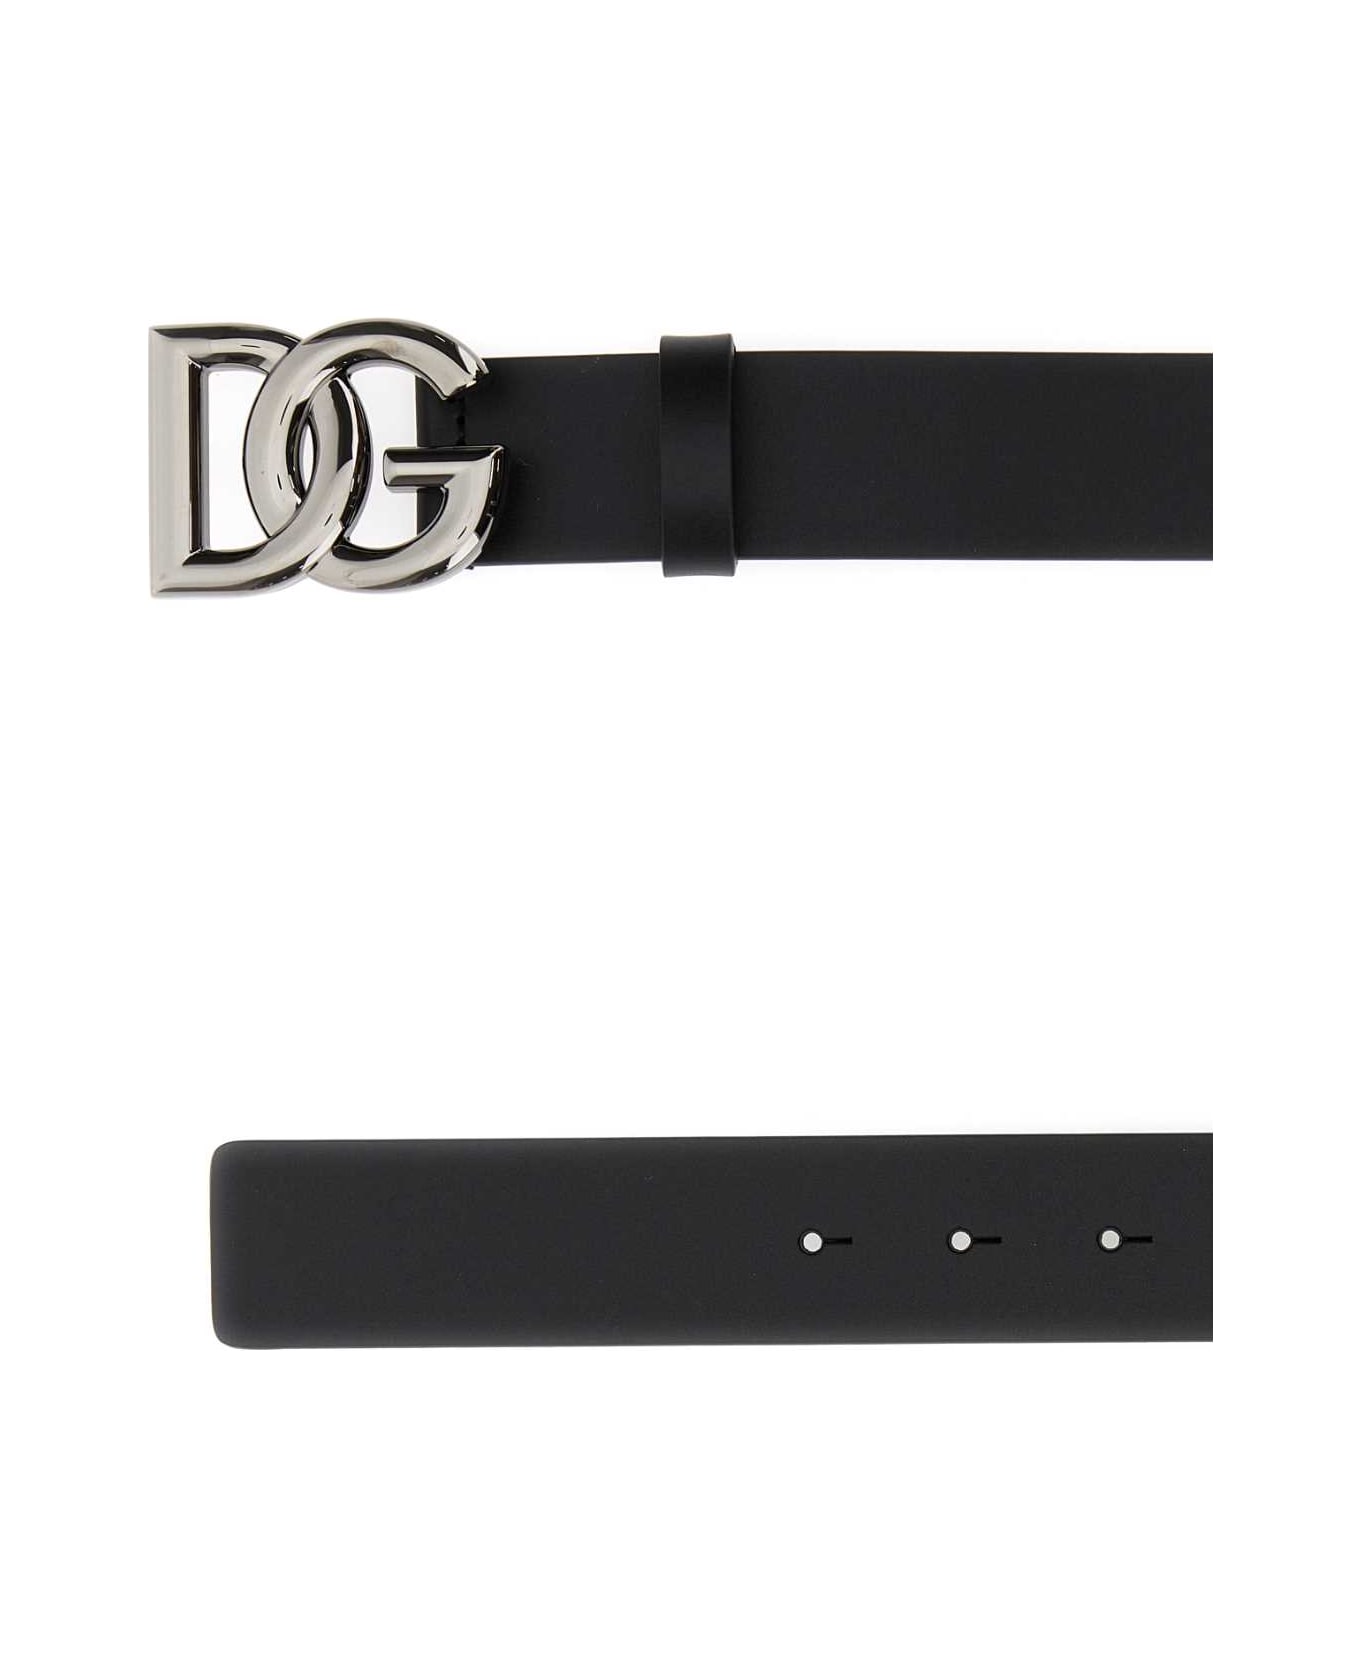 Dolce & Gabbana Black Leather Belt - 8V363 ベルト